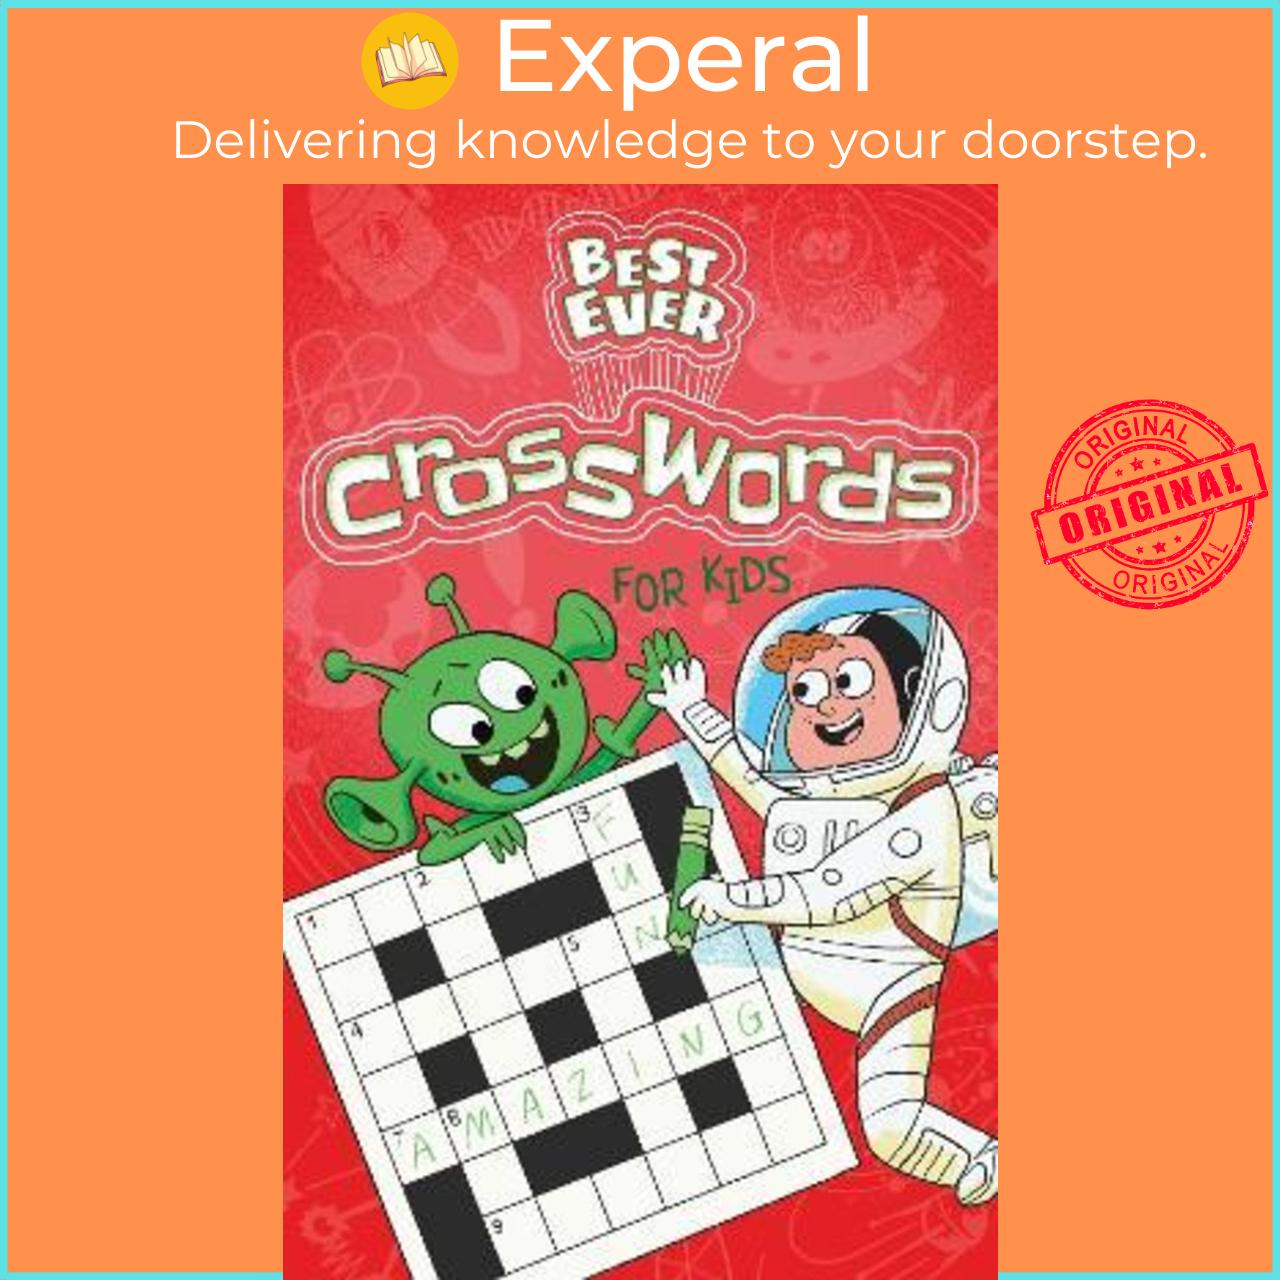 Sách - Best Ever Crosswords for Kids by Ivy Finnegan (UK edition, paperback)